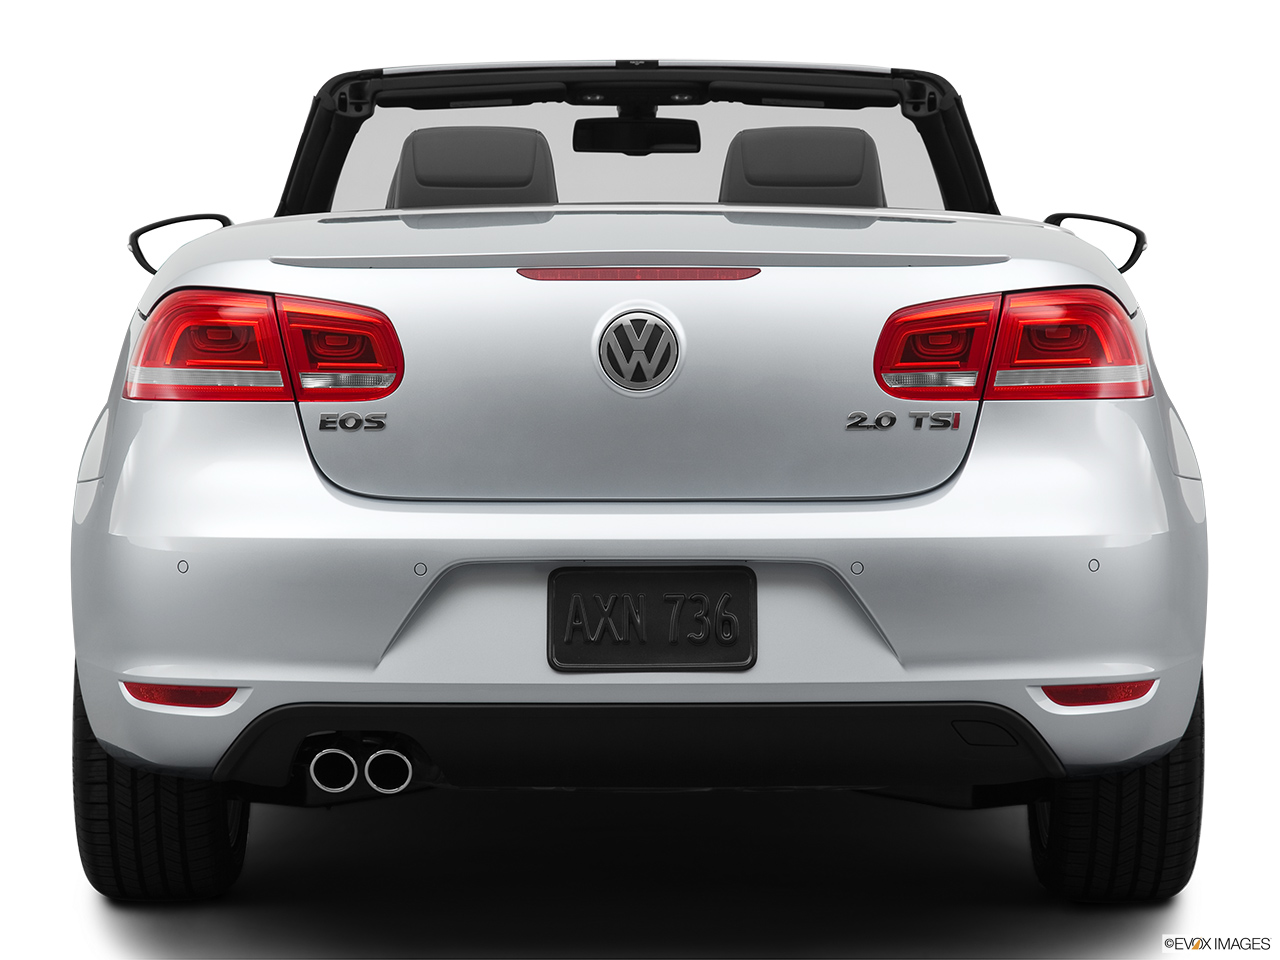 2012 Volkswagen Eos Lux Low/wide rear. 